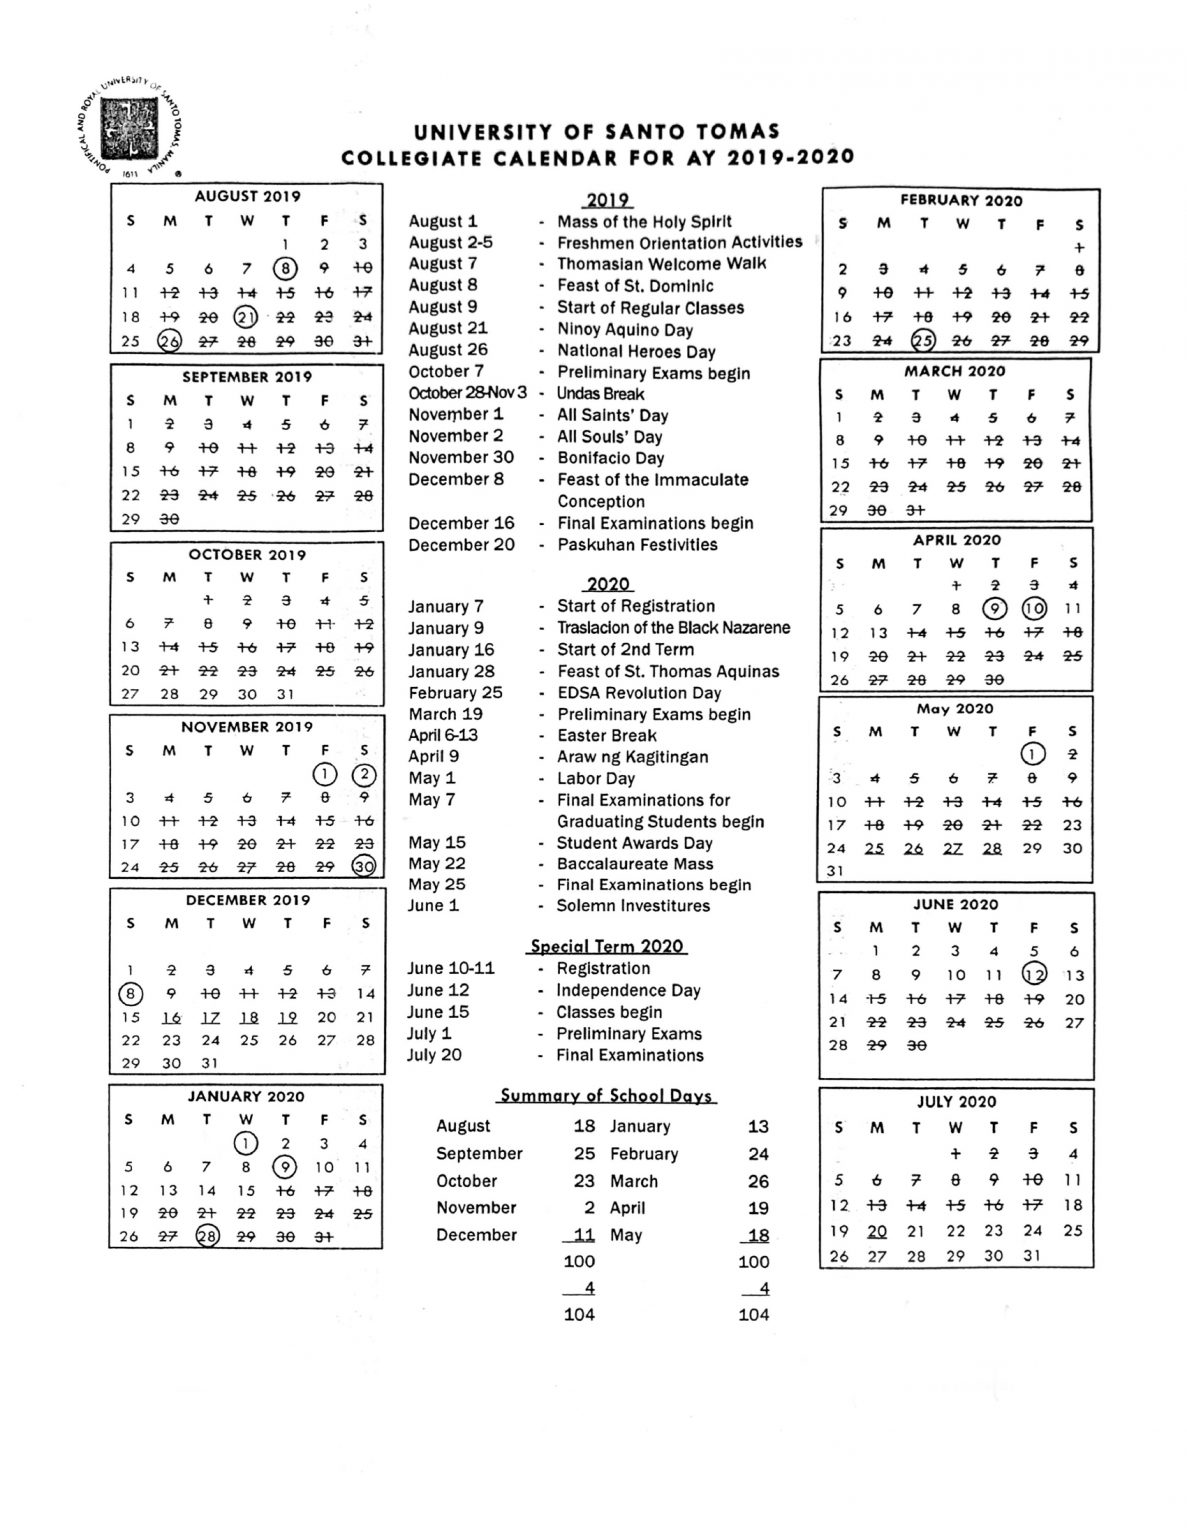 Academic Calendar University of Santo Tomas